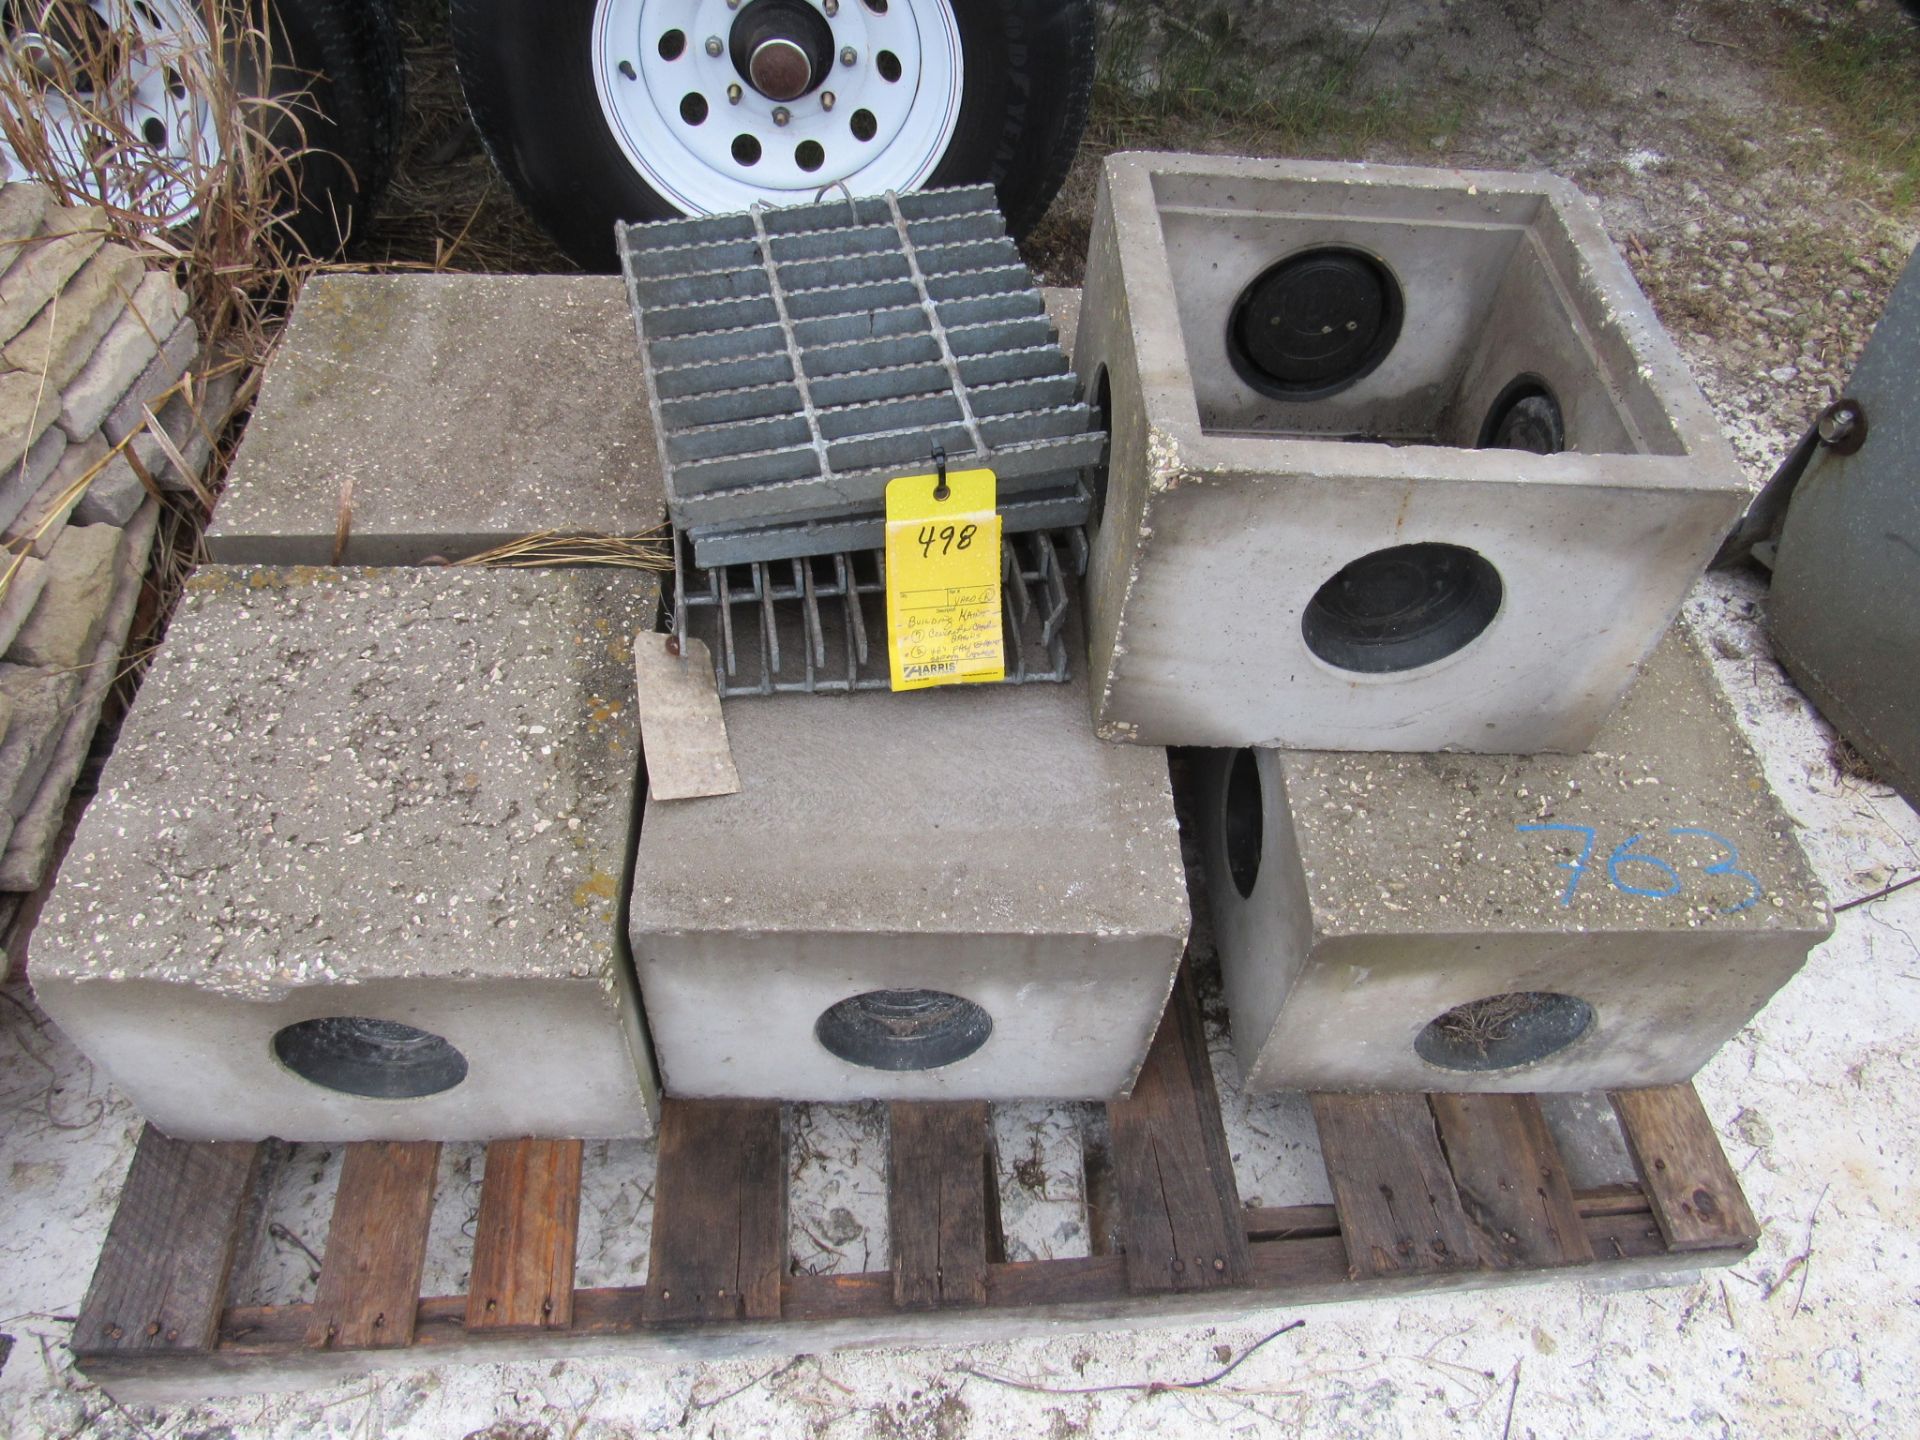 Building Maintenance: (7) Concrete Catch Basins, (2) 48" Fan Exhaust Safety Covers - Image 3 of 4